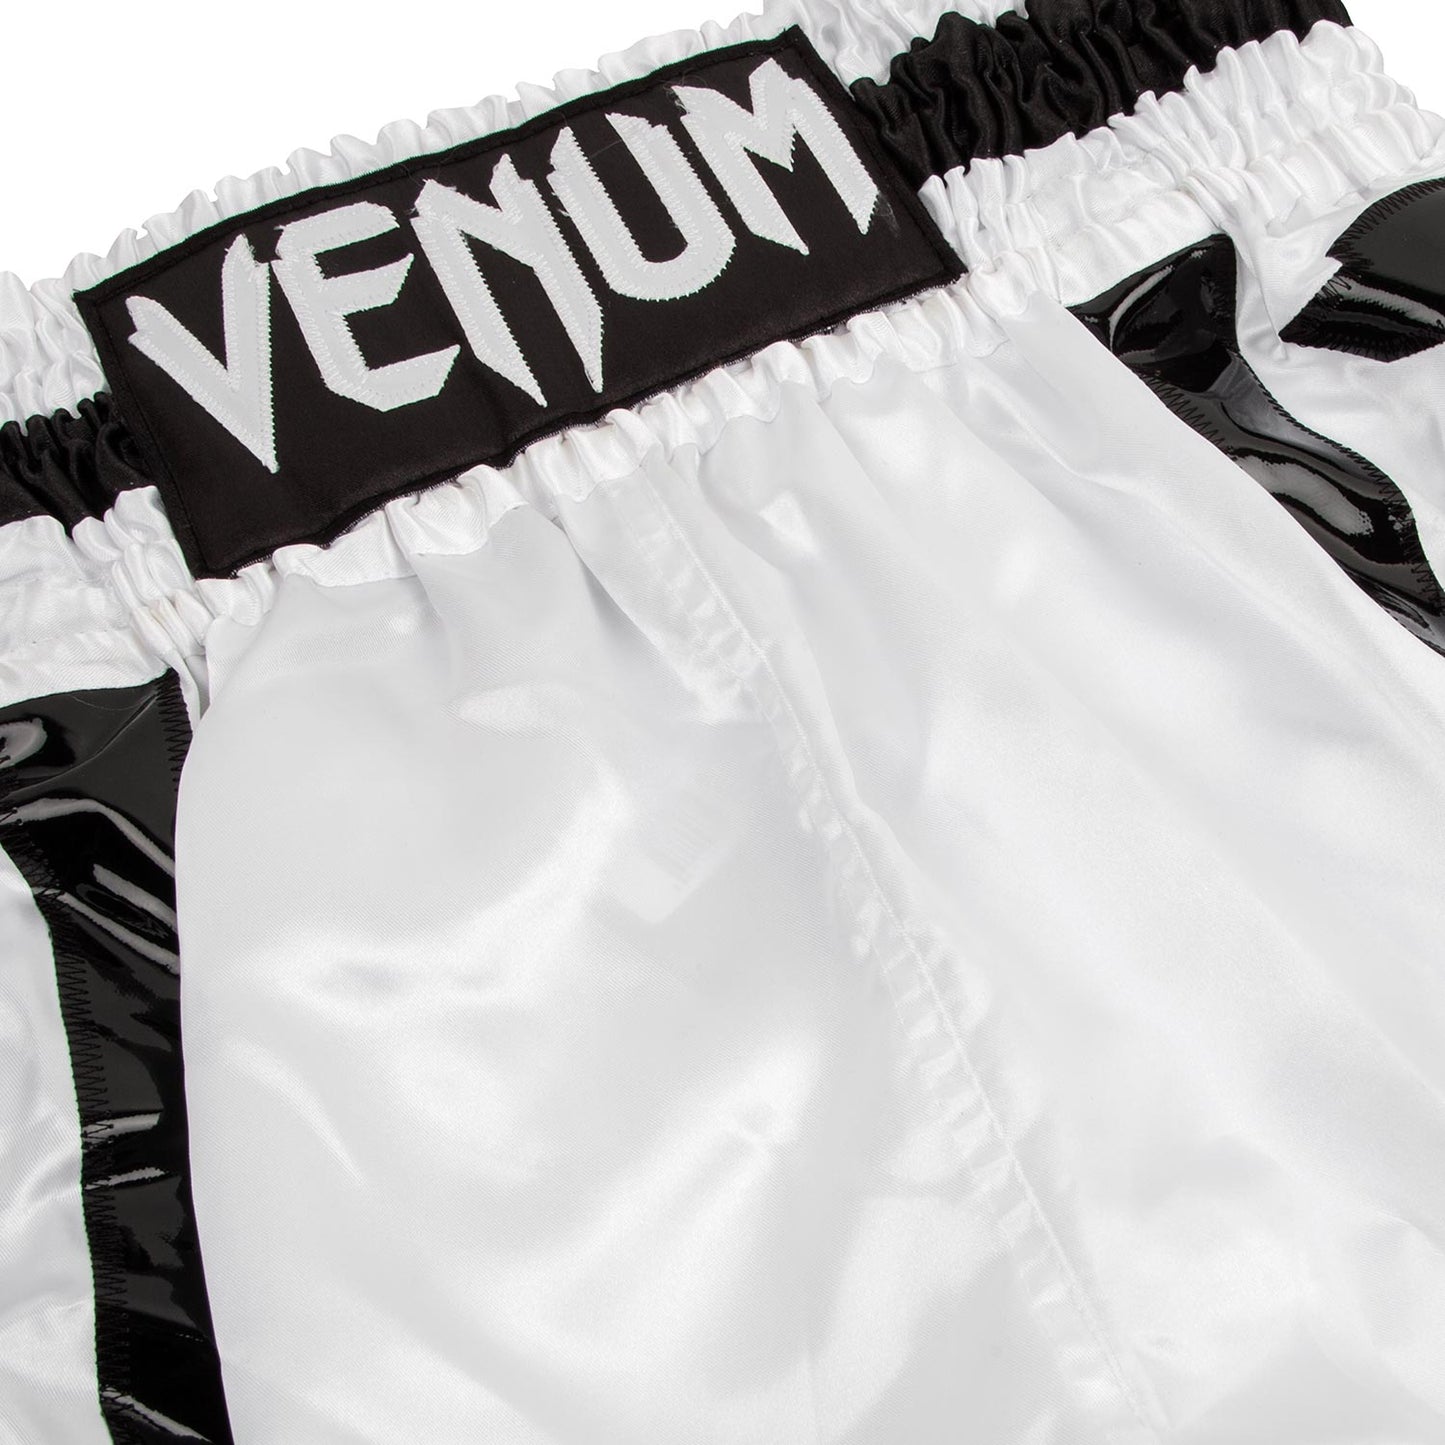 Pantaloncini da boxe Venum Elite